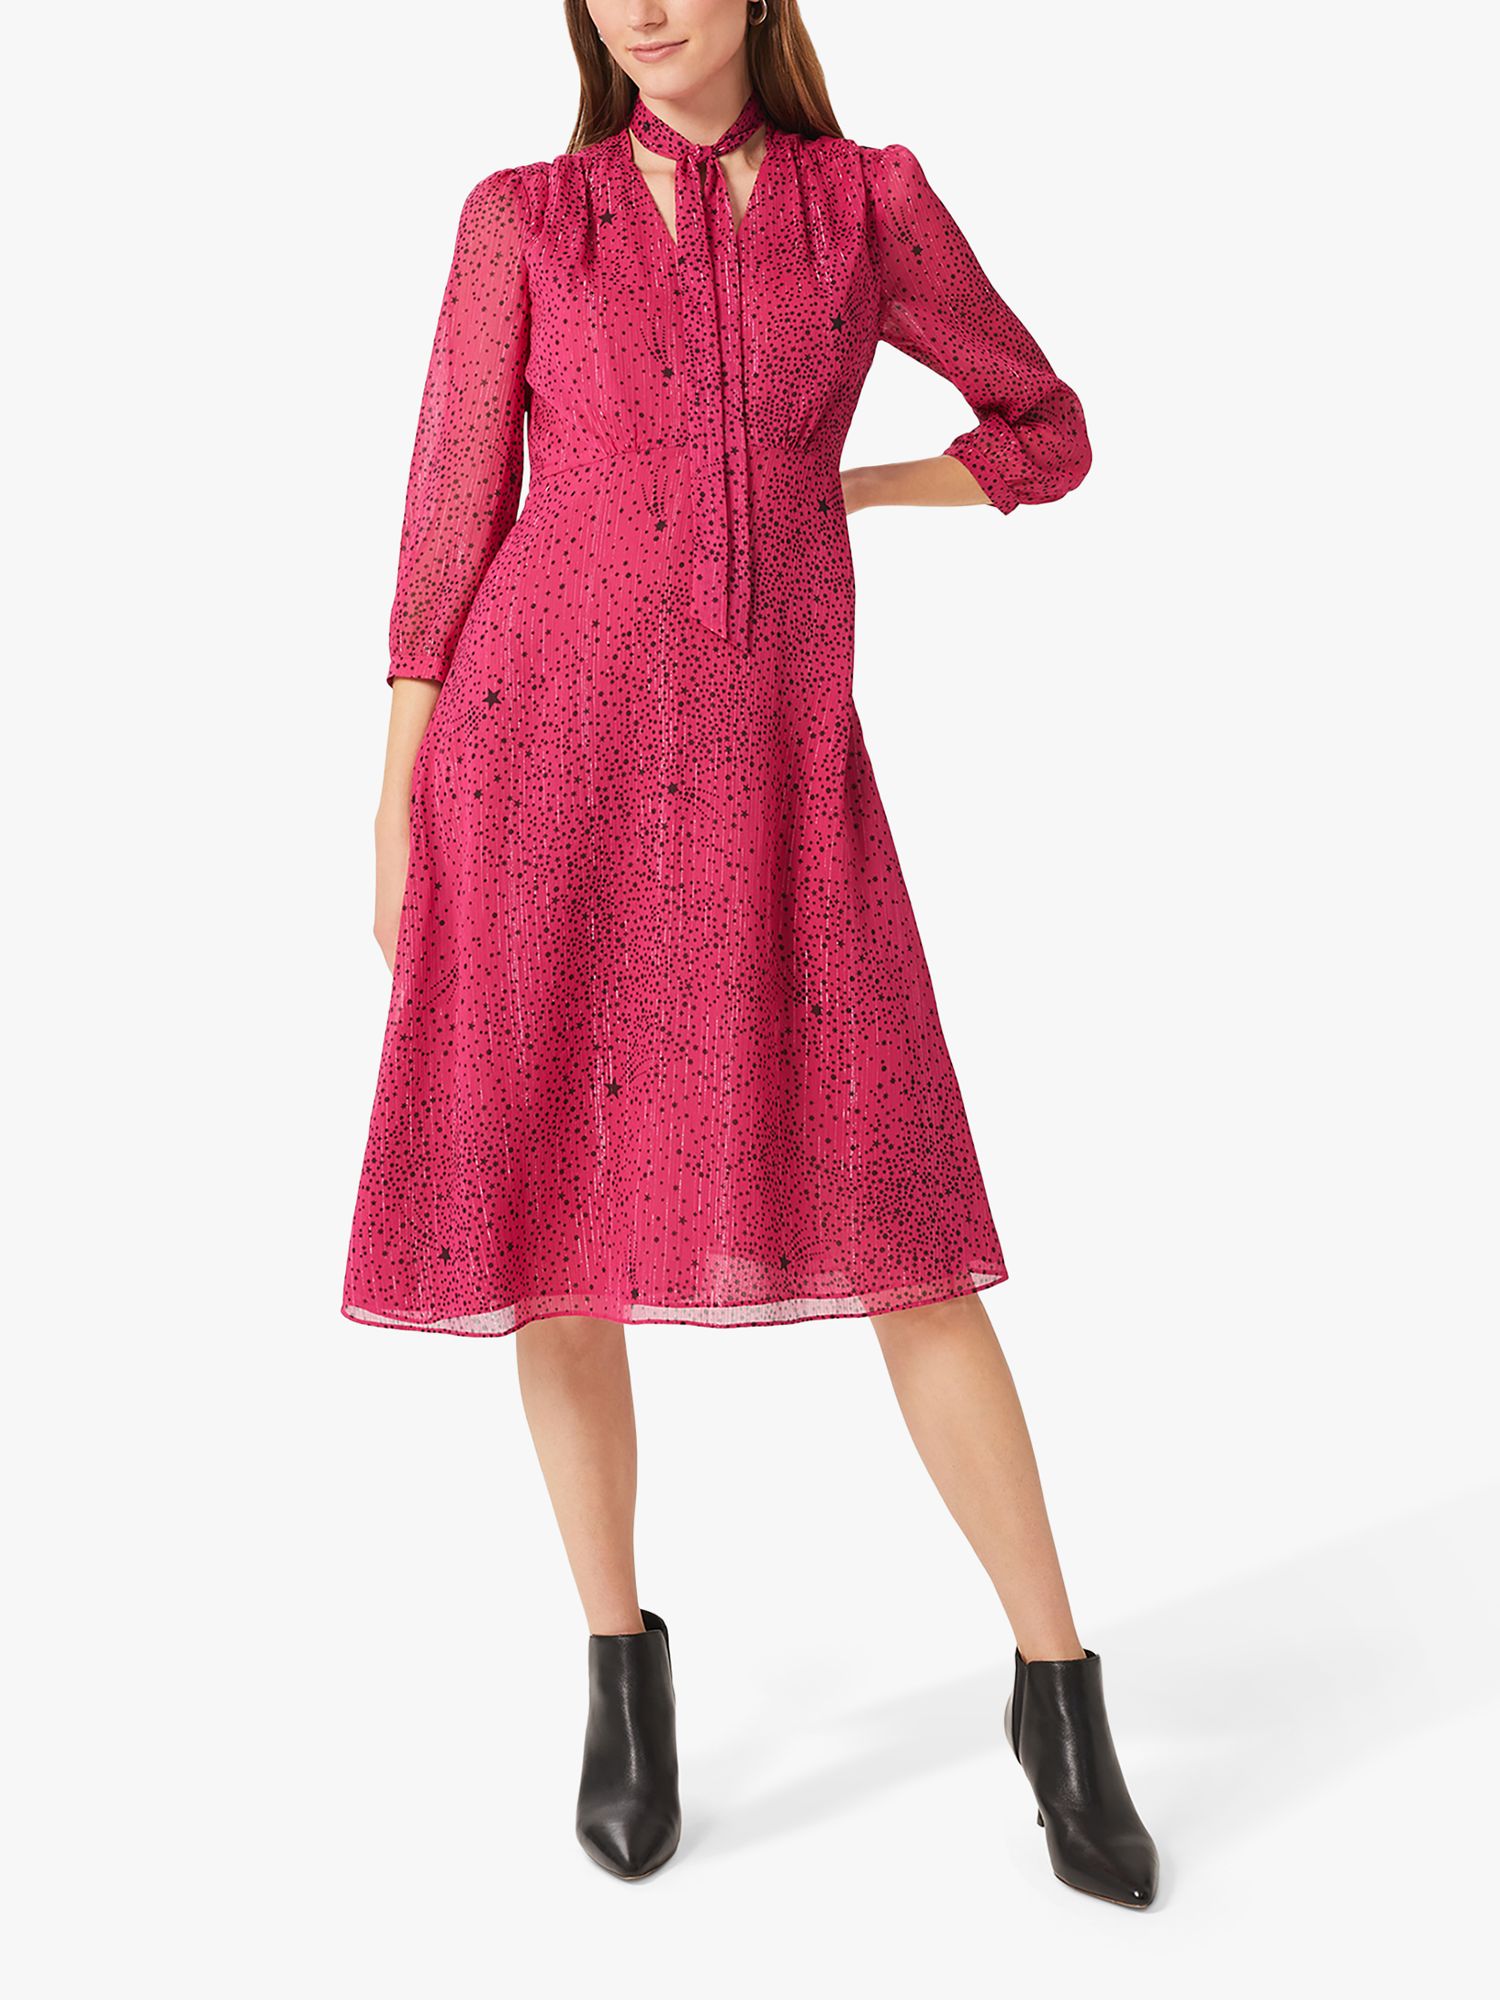 Hobbs Maxine Star Print Dress, Pink/Black at John Lewis & Partners